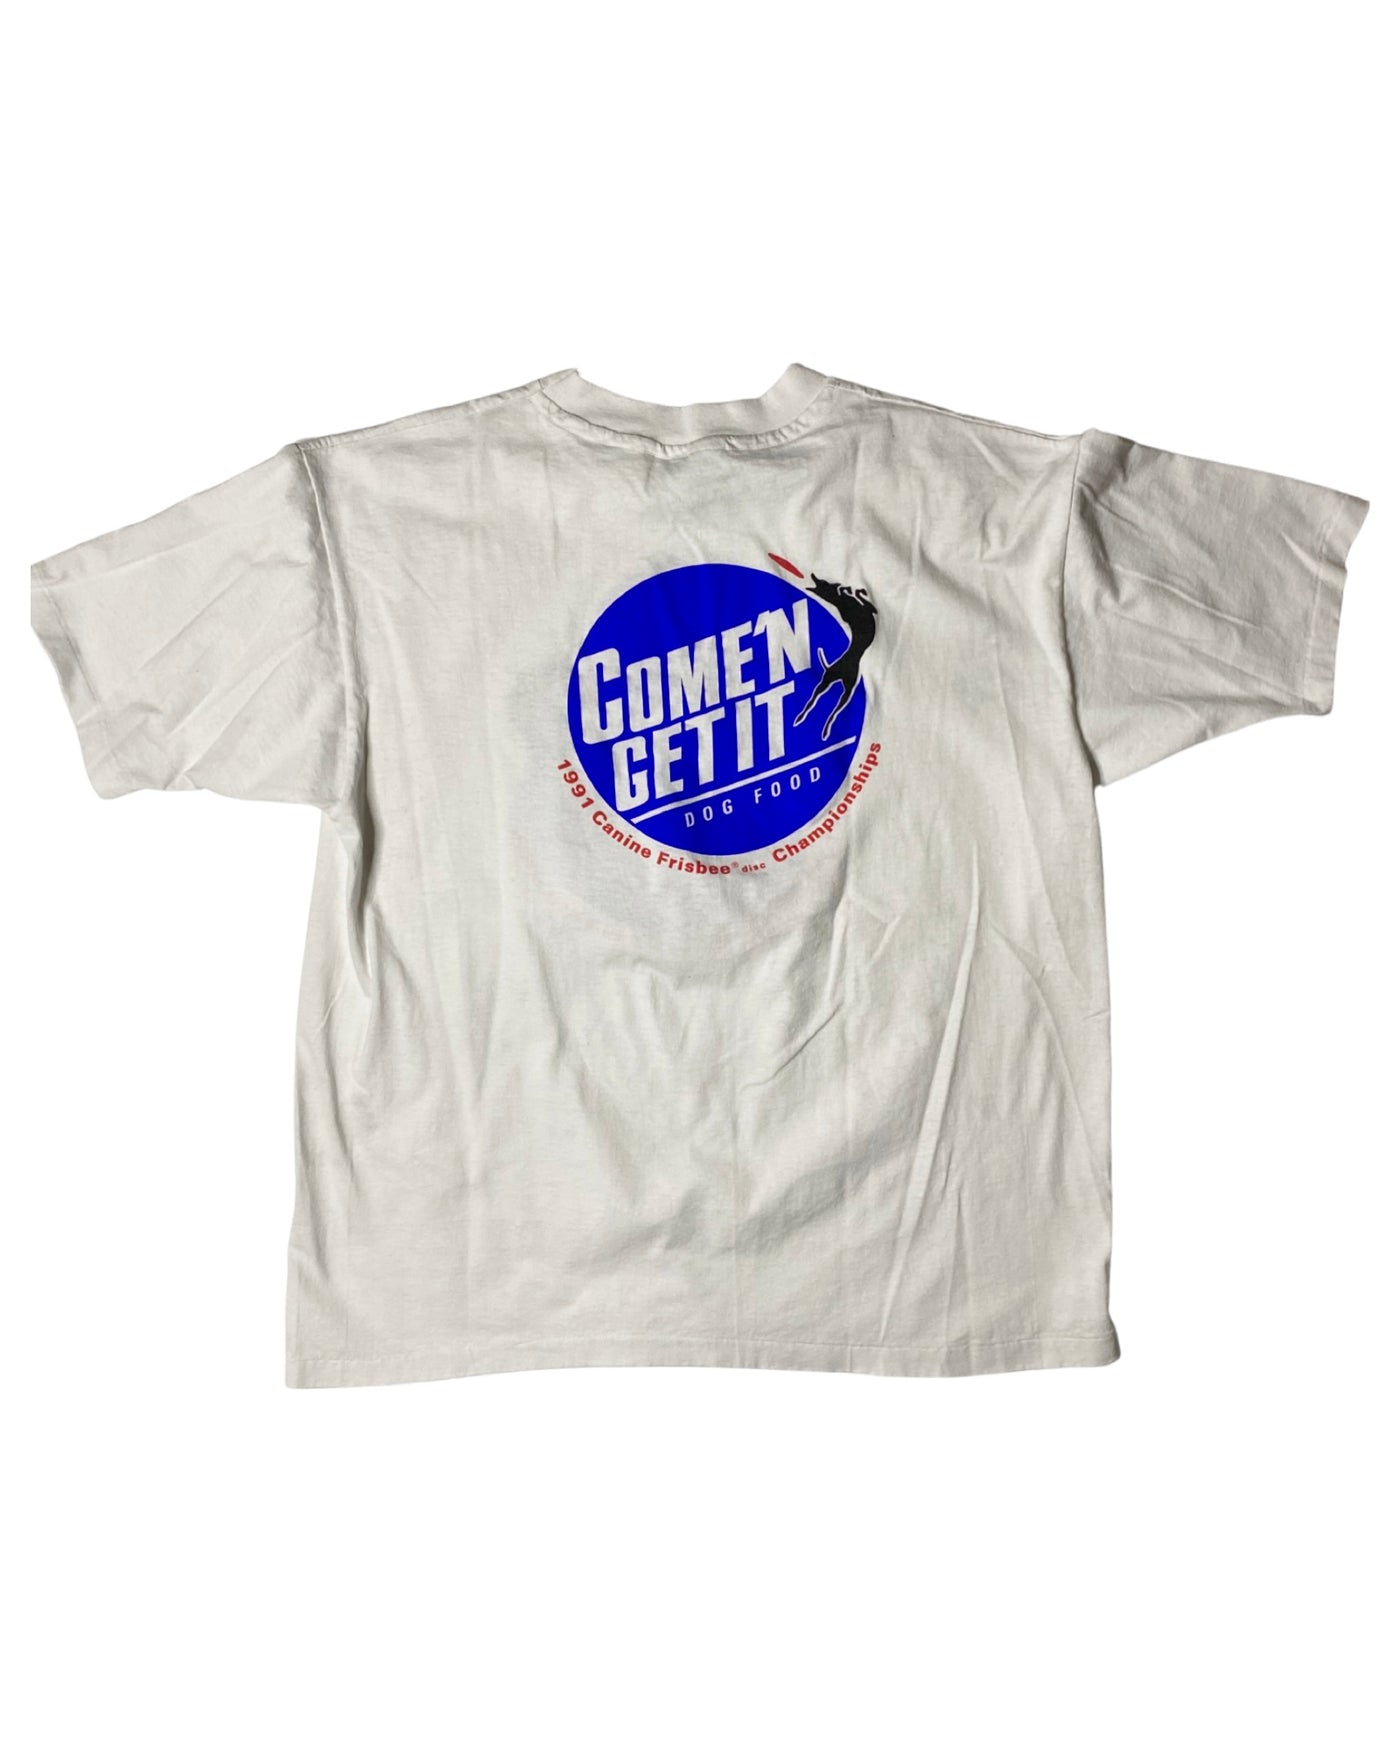 Vintage 1991 Canine Disc Championship T-Shirt